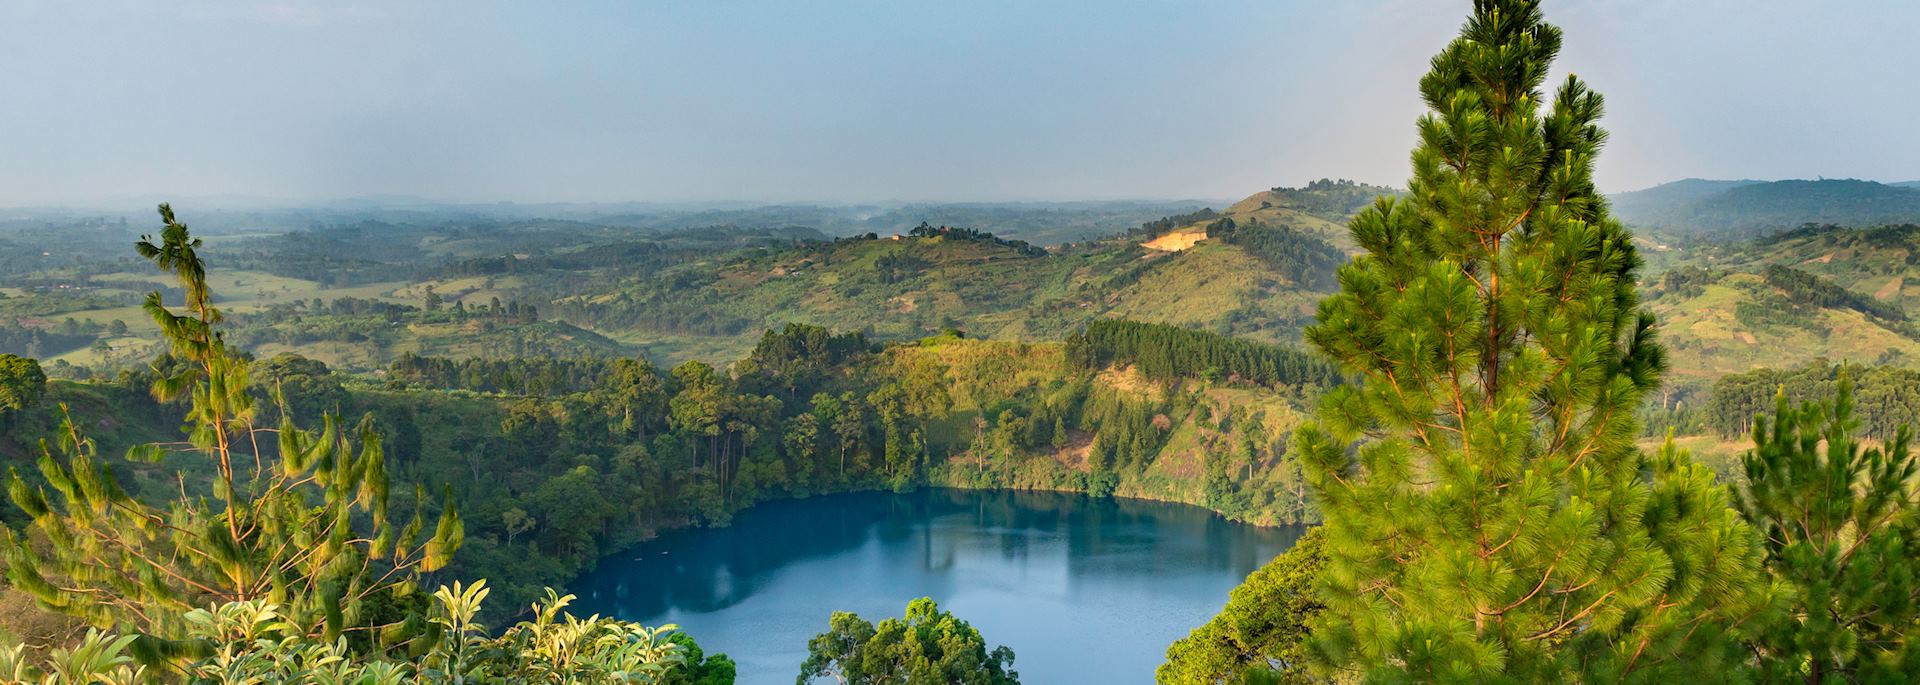 Crater Lakes Region, Uganda